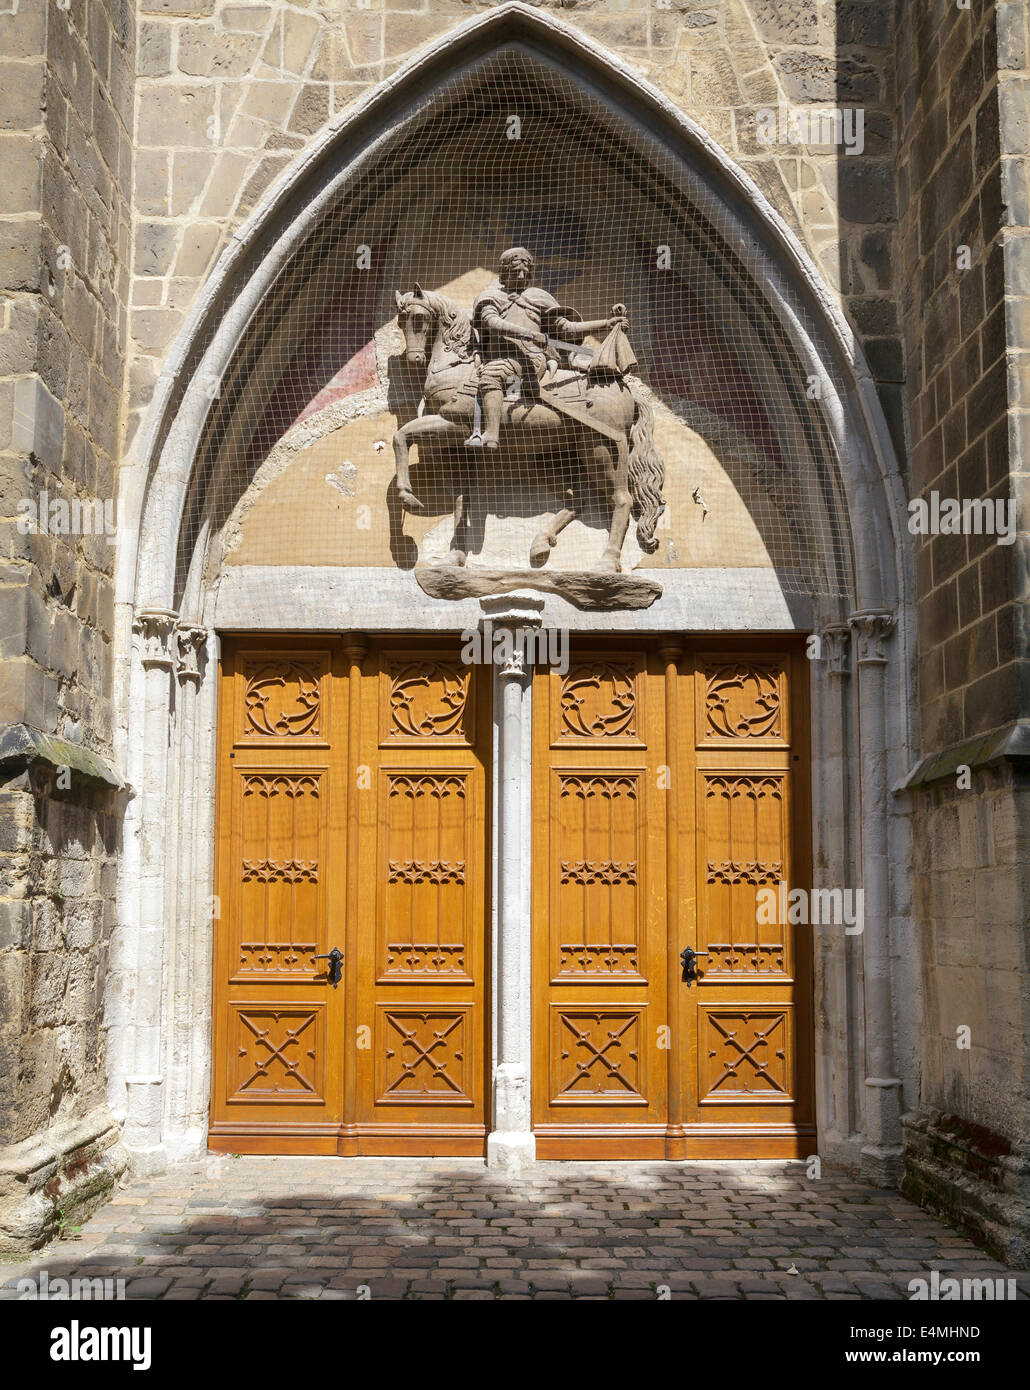 St Martins Chiesa - ingresso con la figura di San Martino sopra, Halberstadt, Sassonia Anhalt, Germania Foto Stock